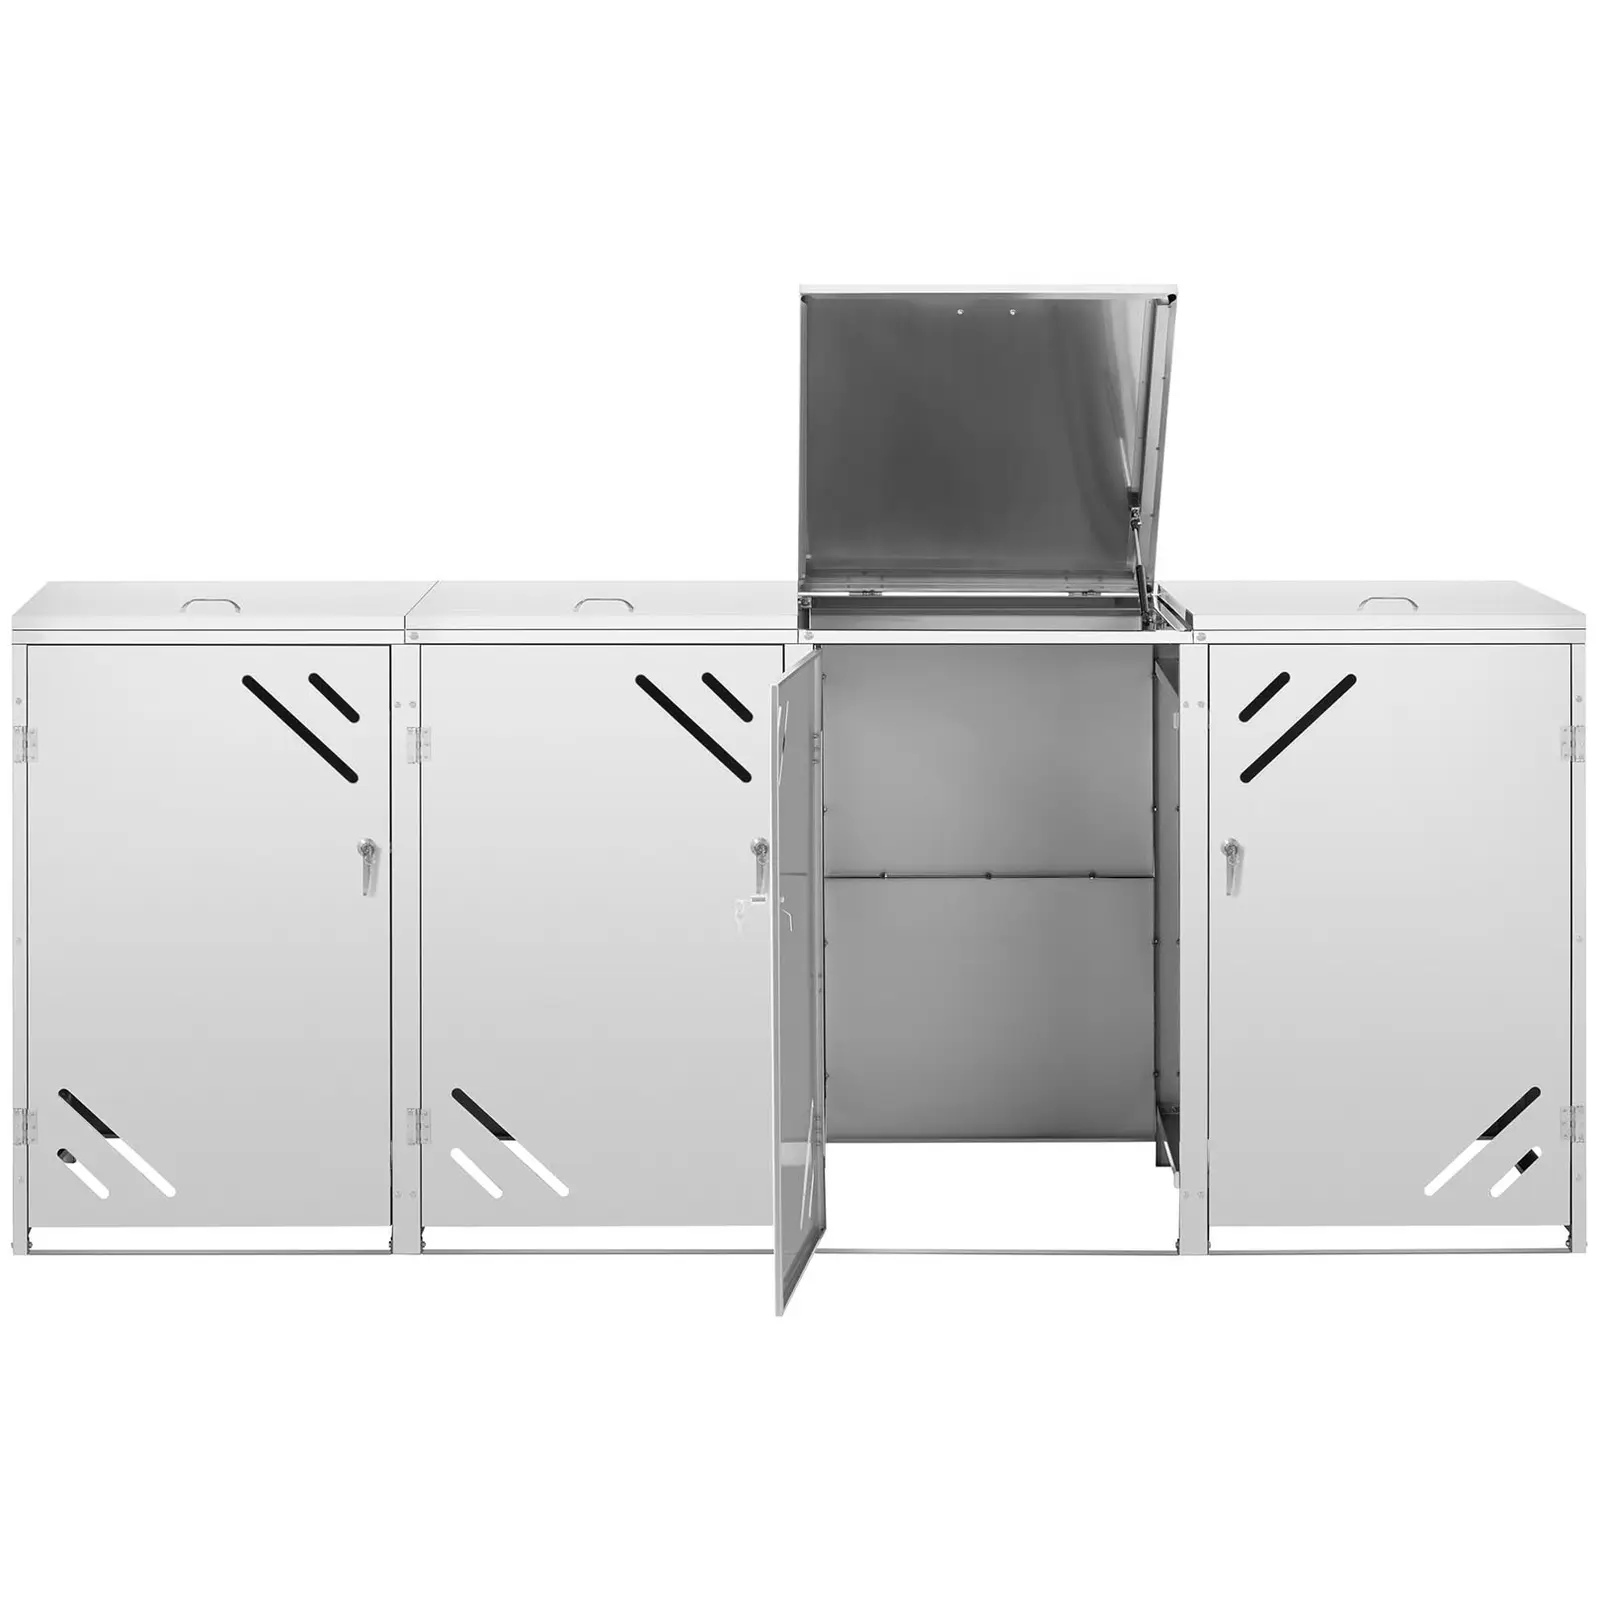 Mülltonnenbox - 4 x 240 l - diagonale Luftschlitze